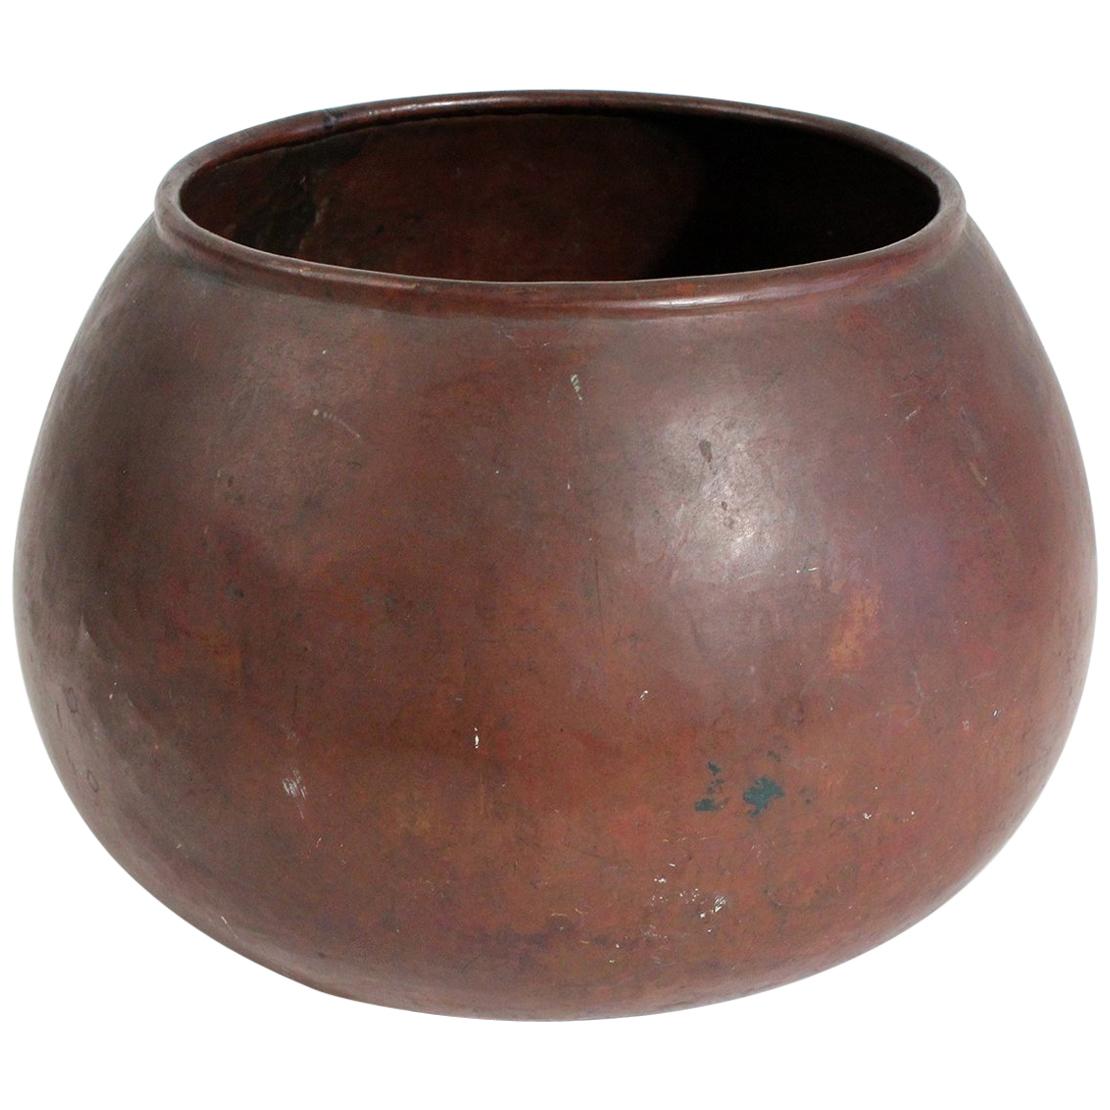 1910 Dirk Van Erp & D’arcy Gaw Hand-Hammered Copper Warty Jardiniere Vase Pot For Sale